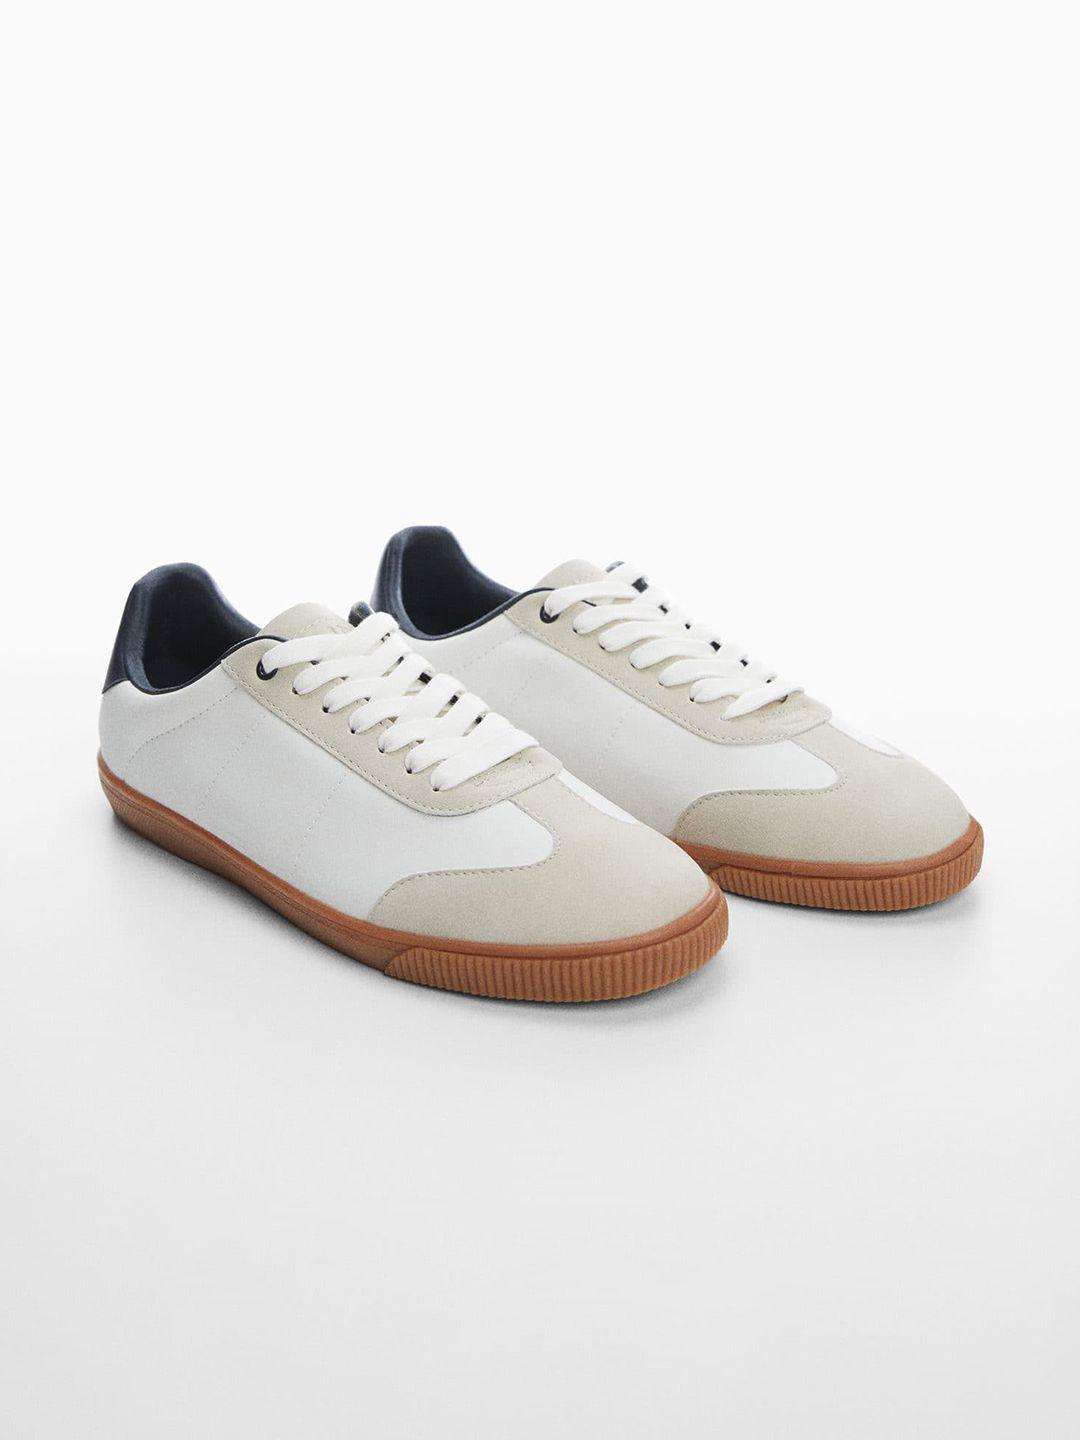 mango-man-colourblocked-leather-sustainable-sneakers